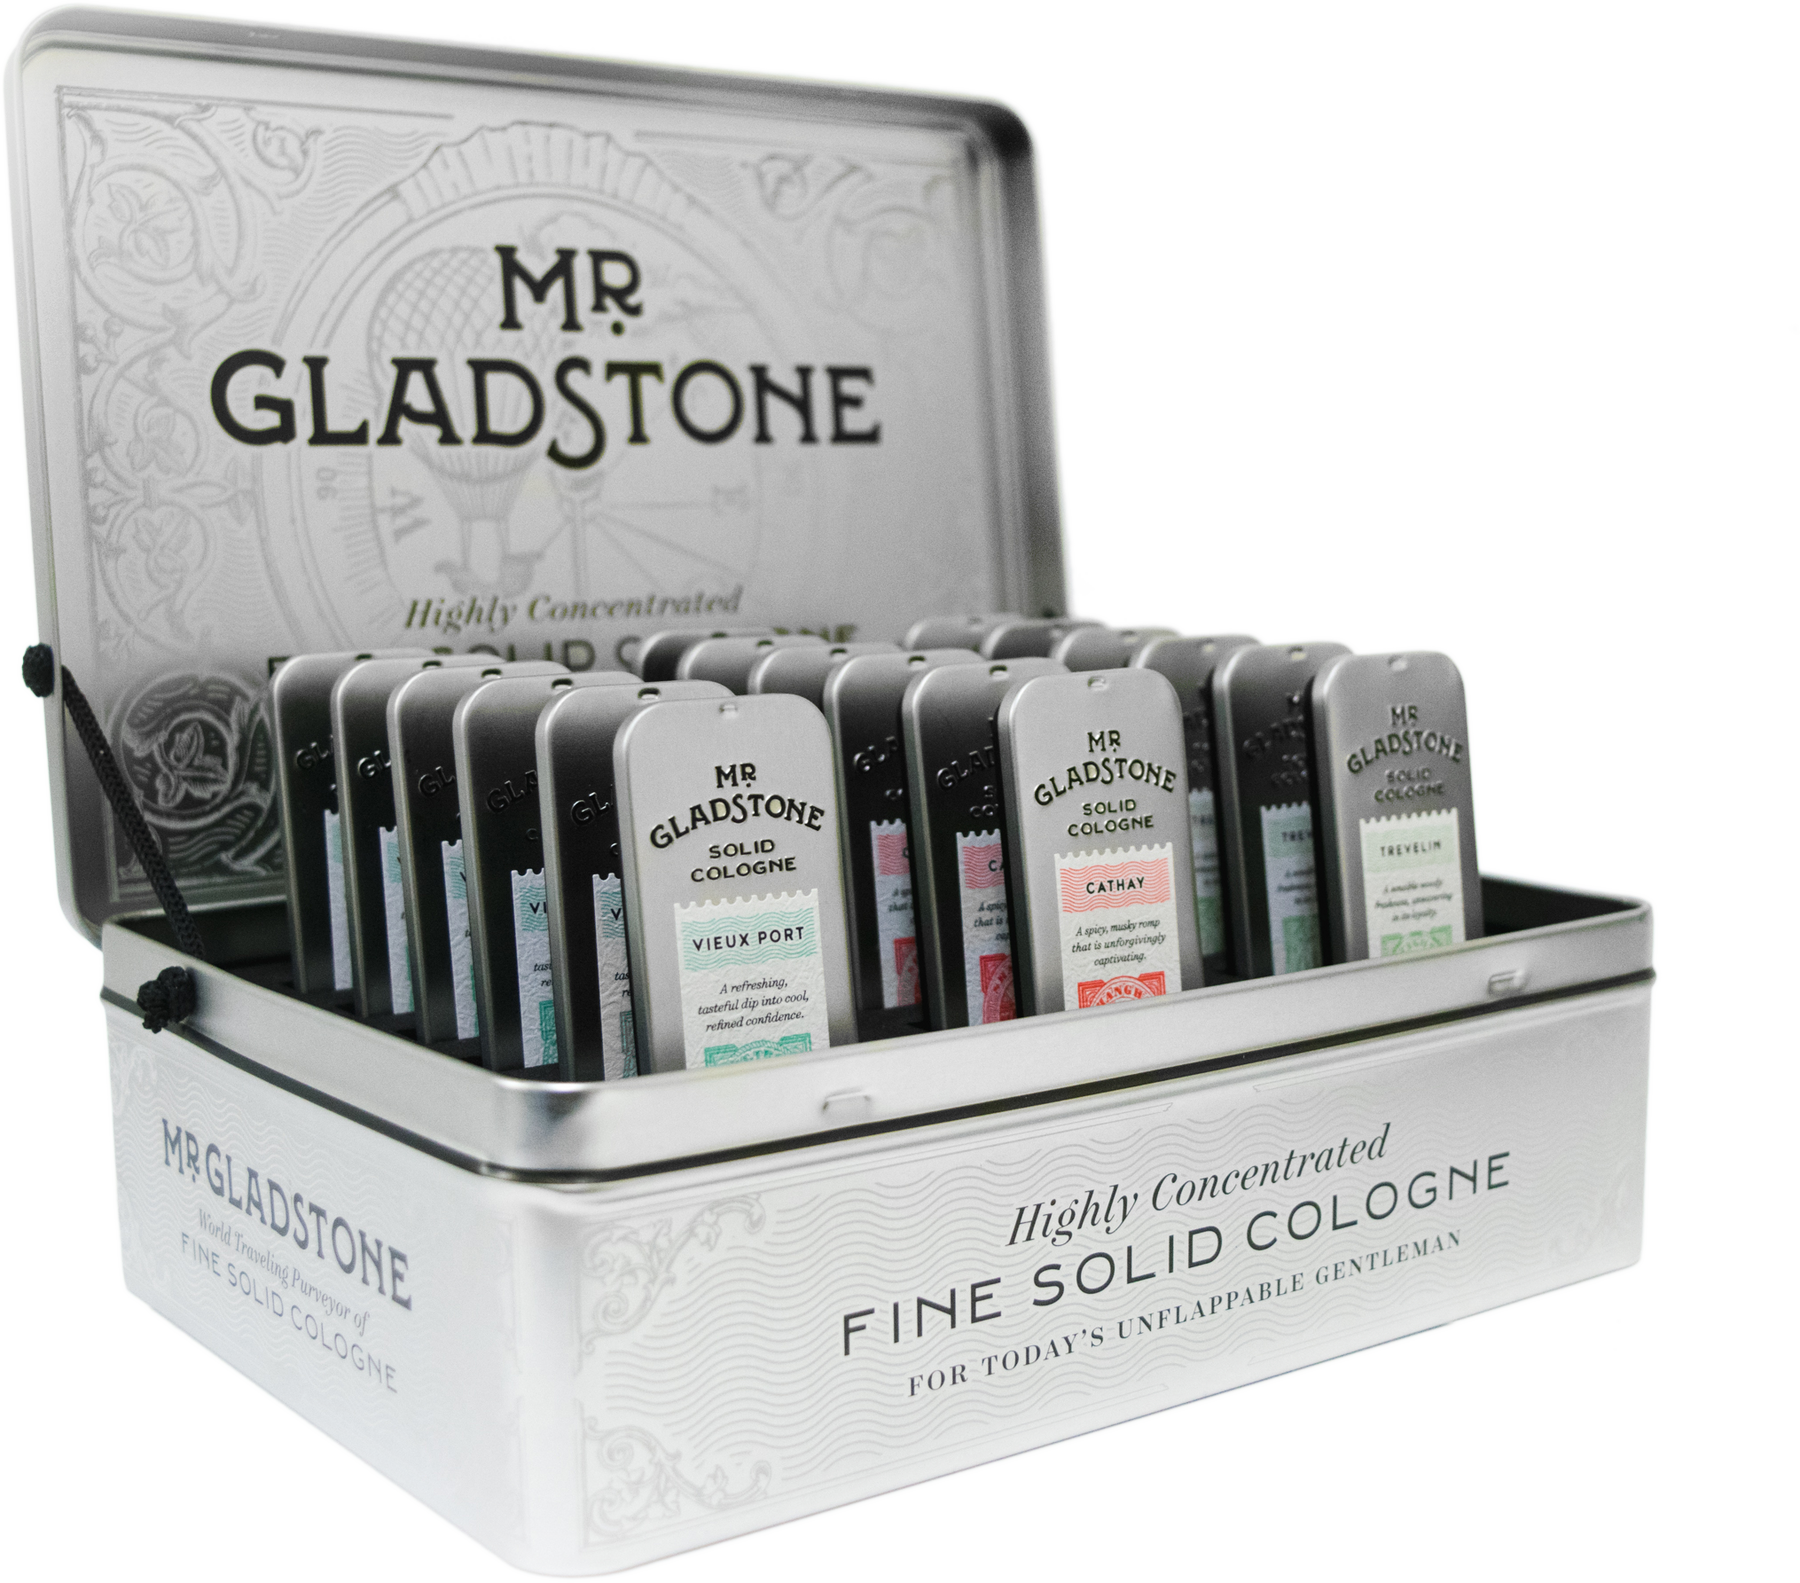 Mr. Gladstone Solid Cologne Full Retail Display Bundle